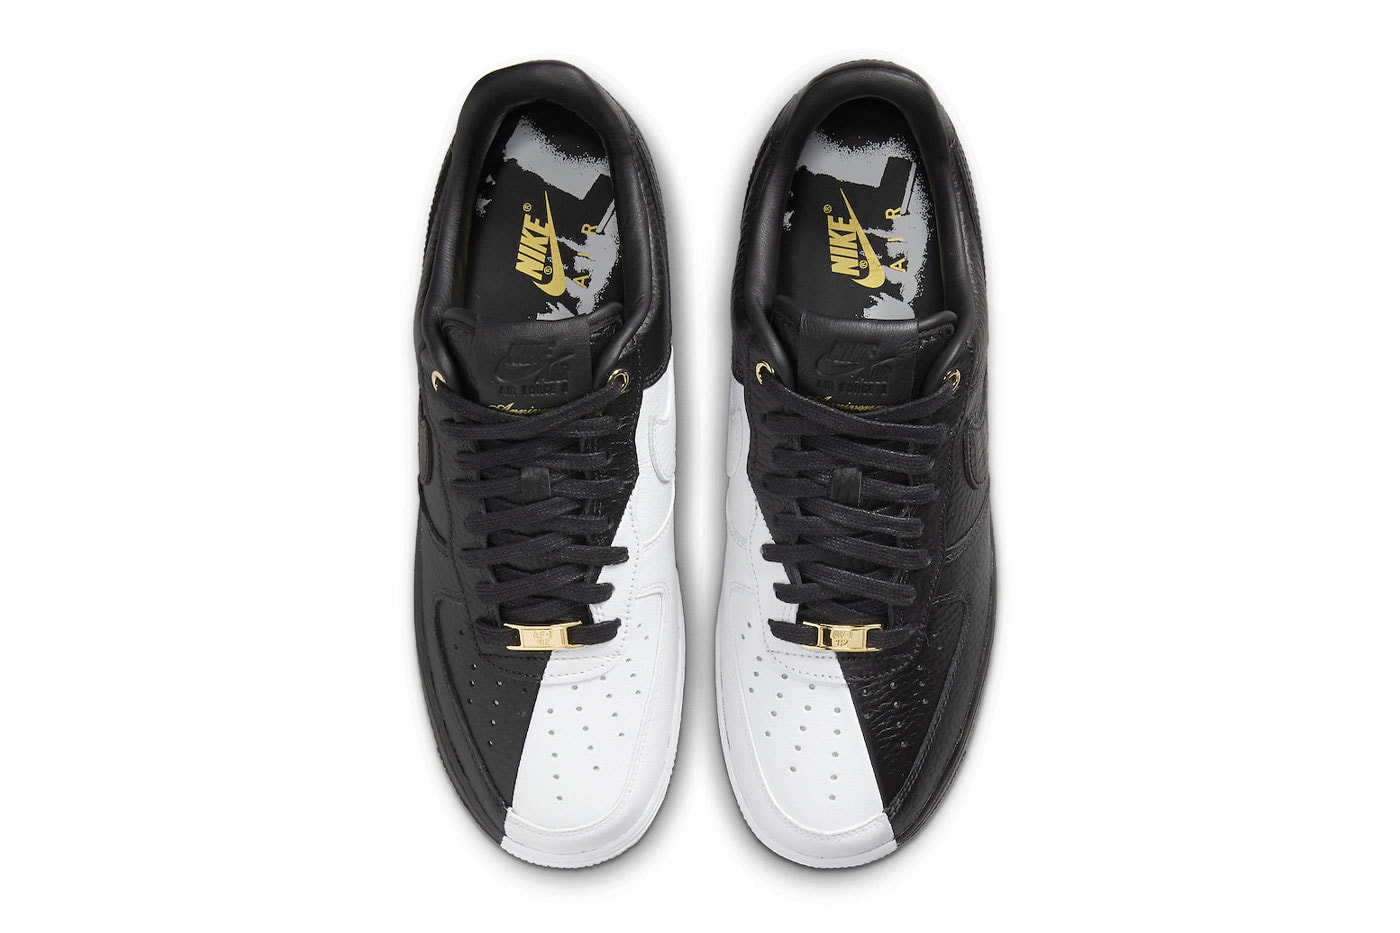 Nike Air Force 1 Anniversary Edition split dx6034 001 black white split gold release info date price